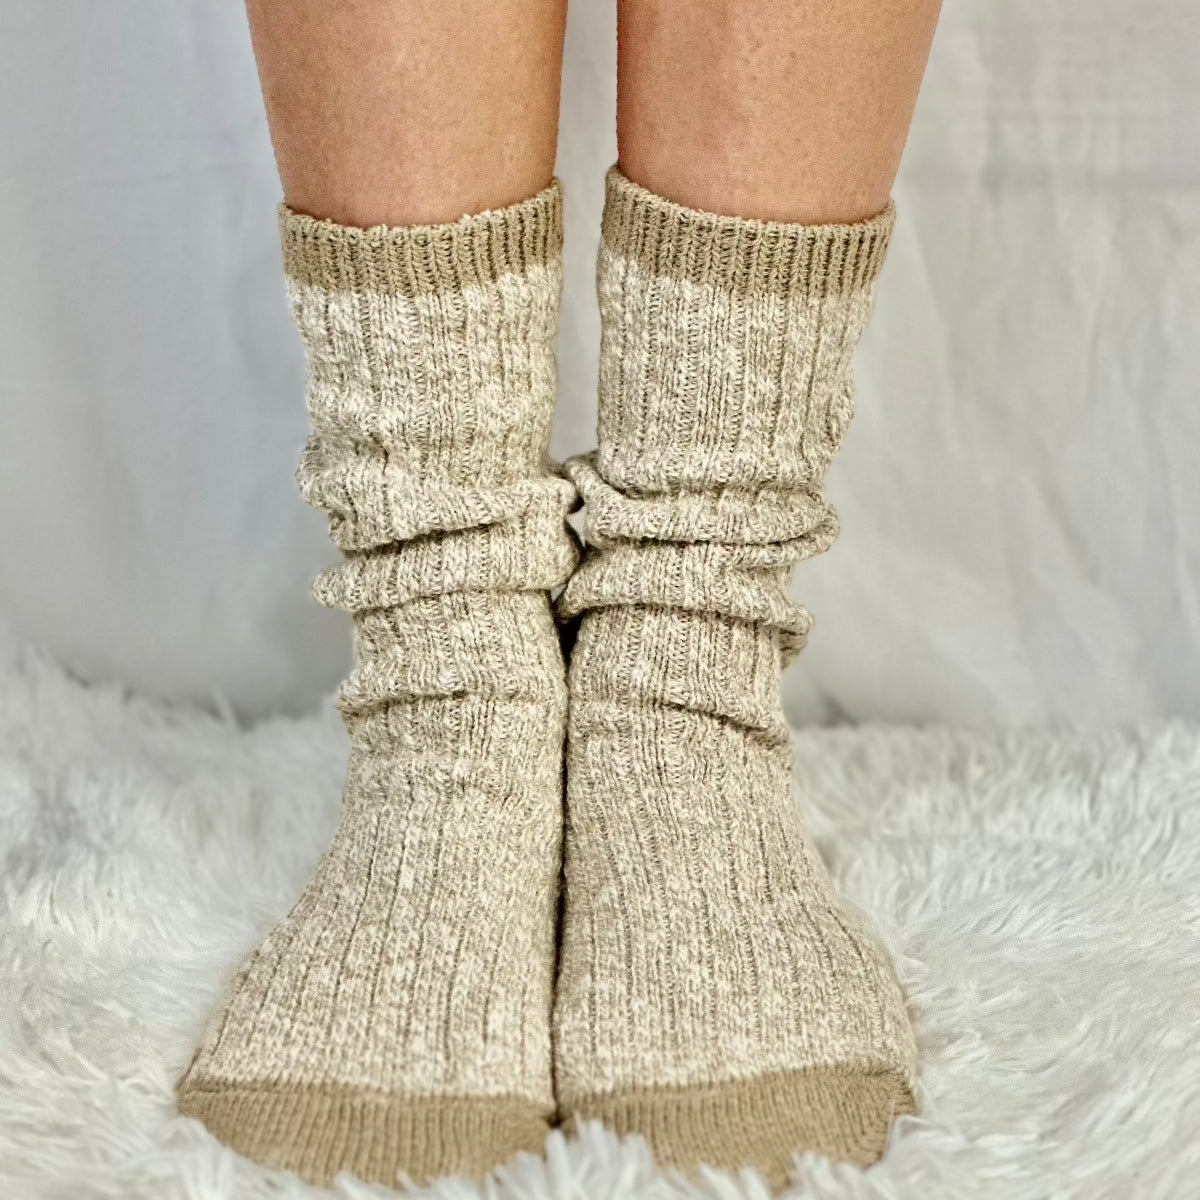 marled yarn tan short ankle boot socks women, USA made hosiery ladies, quality boot socks.